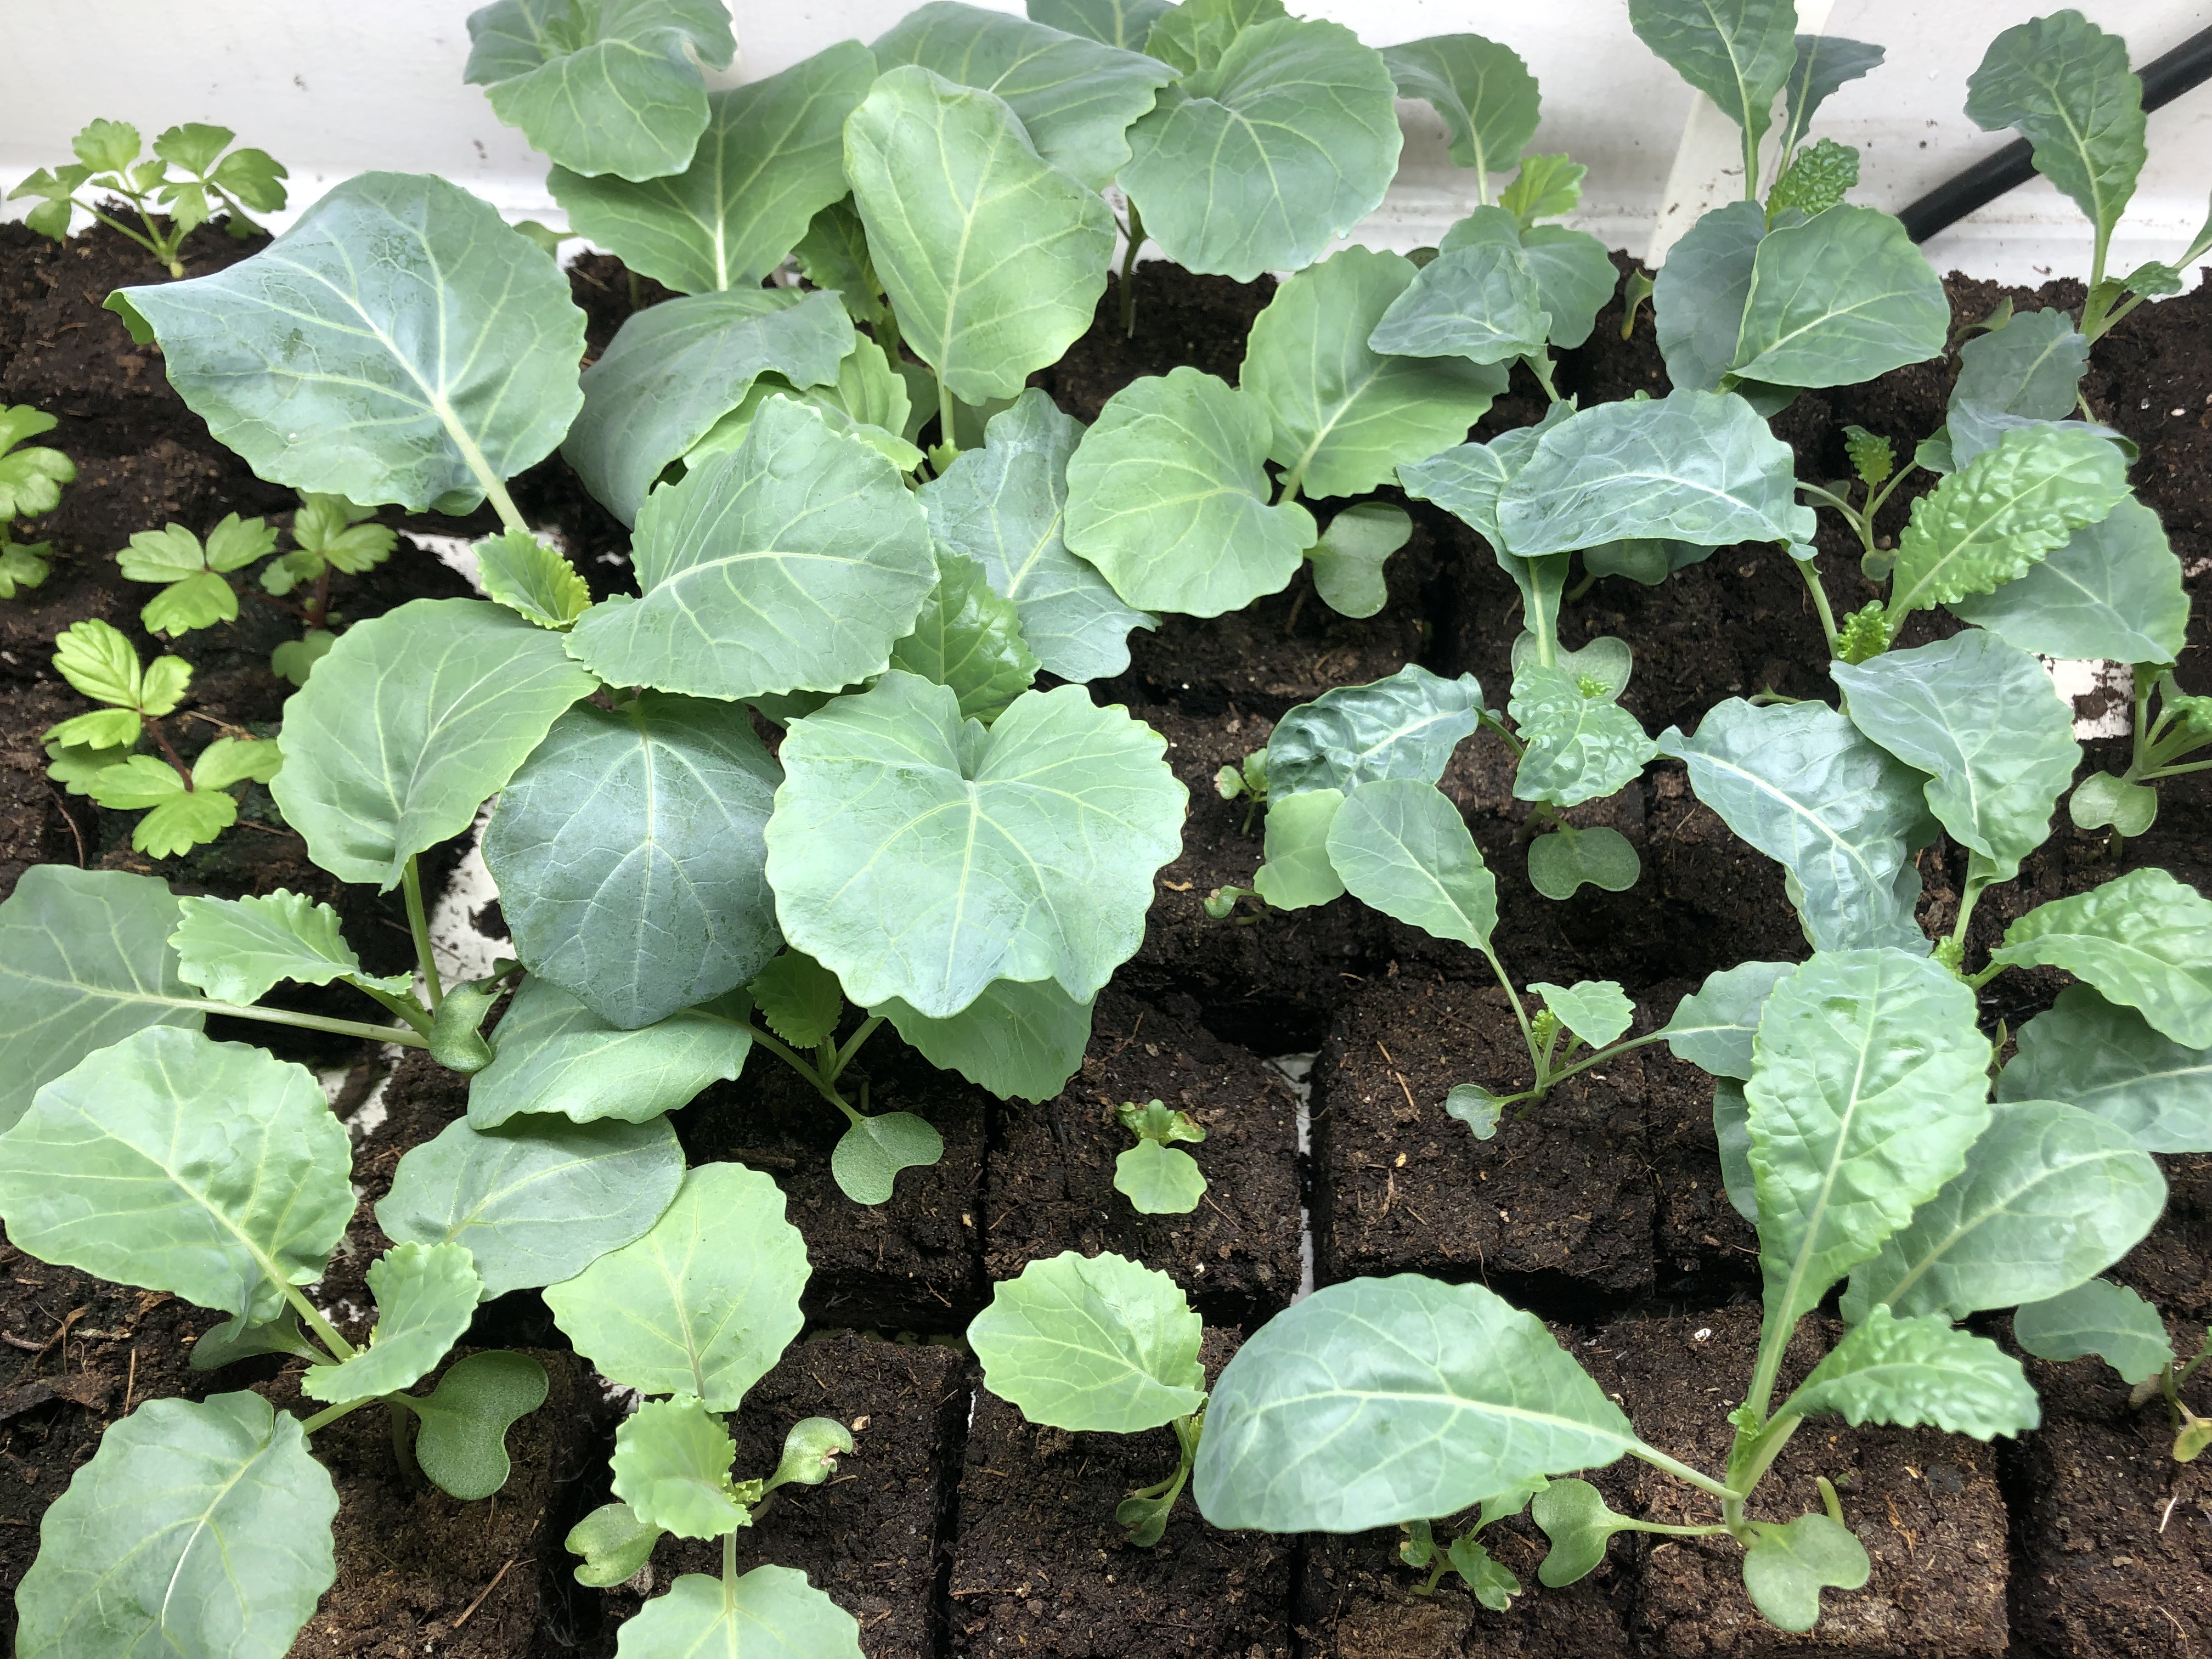 Collard, lacinato kale, and strawberry seedlings growing in soil blocks under grow lights. 